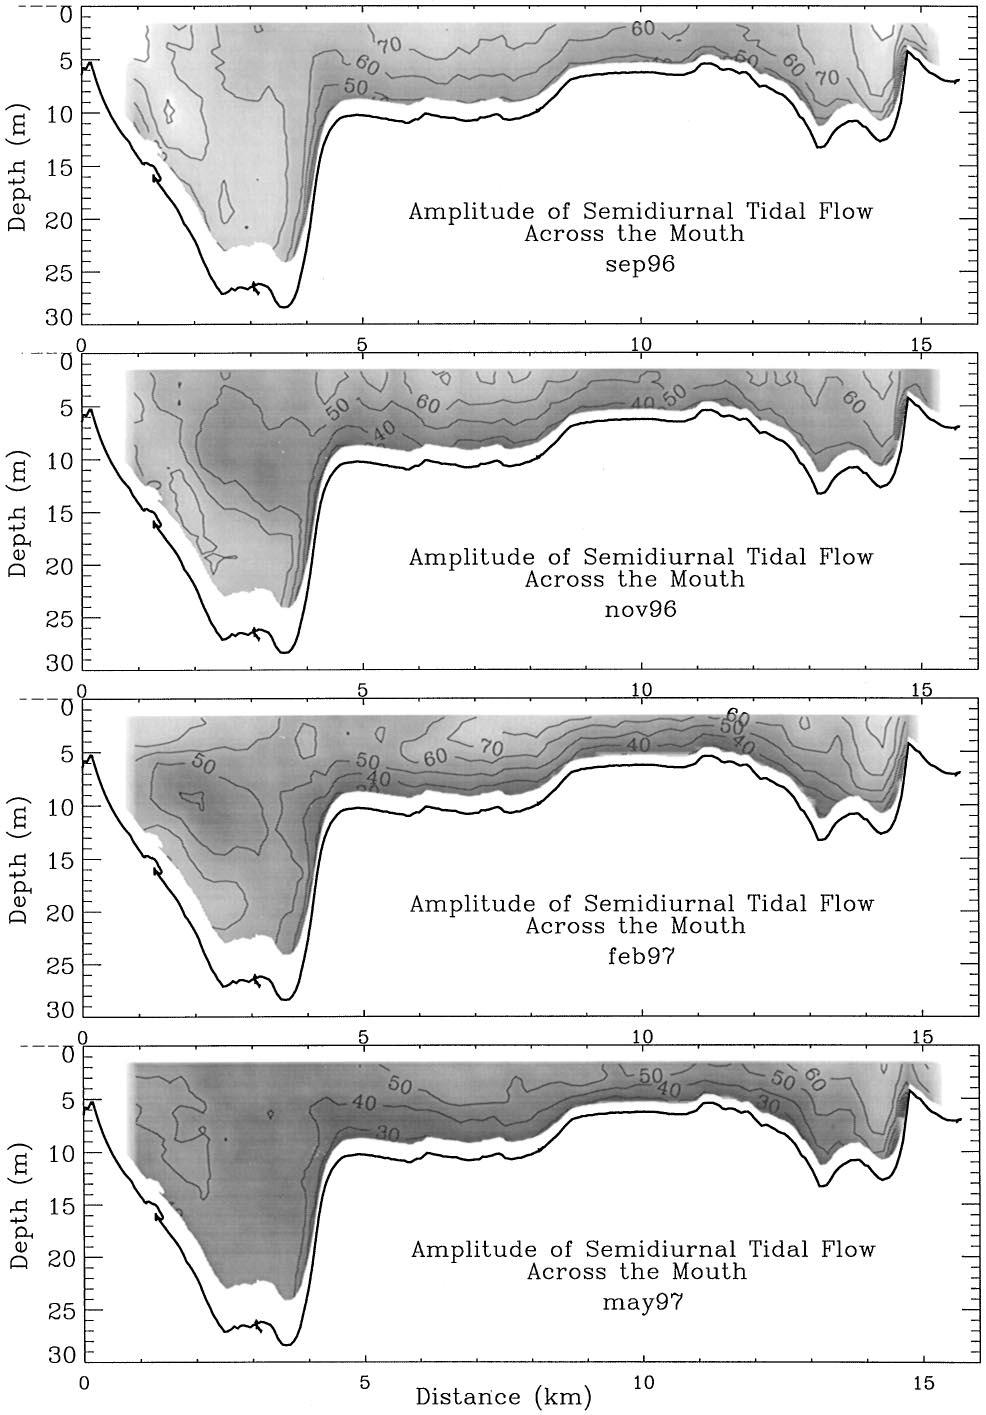 A. Valle Levinson et al./continental Shelf Research 18 (1998) 1157 1177 1163 Fig. 2.